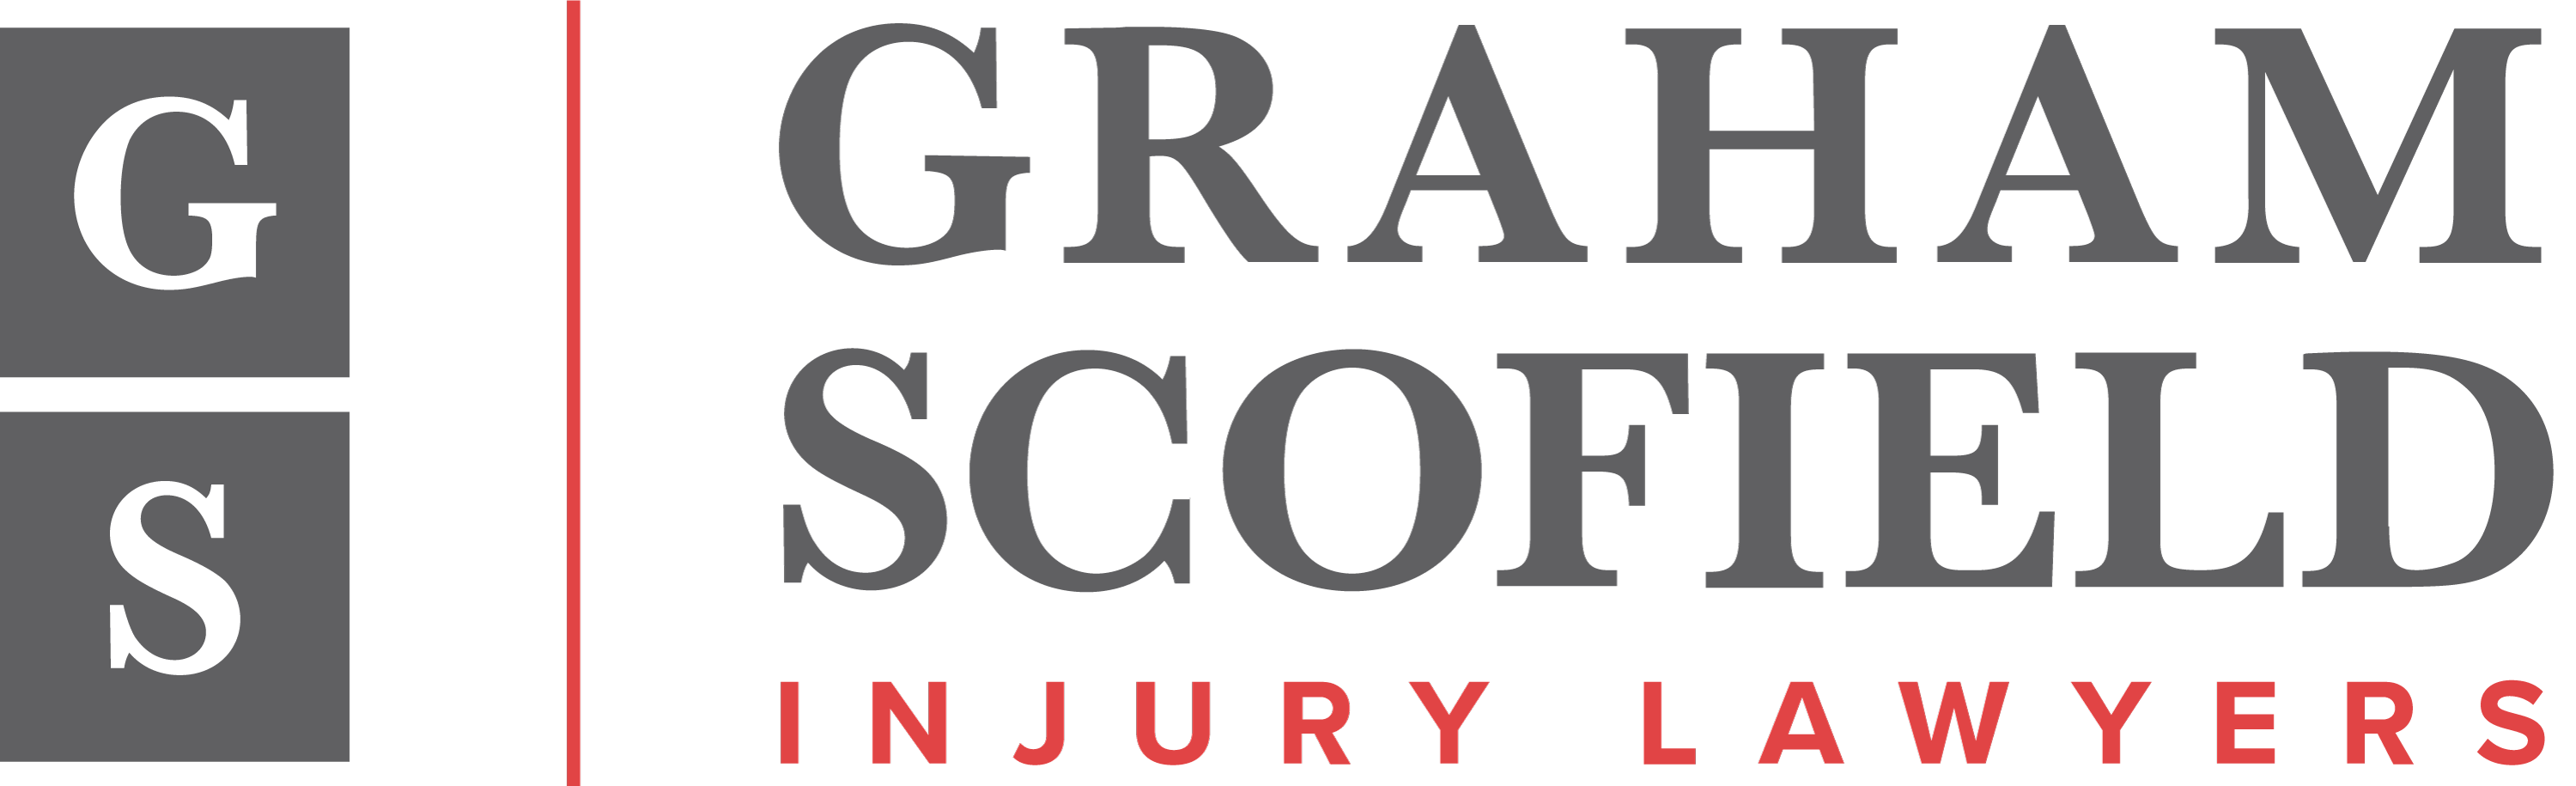 Graham Scofield Injury Lawyers logo